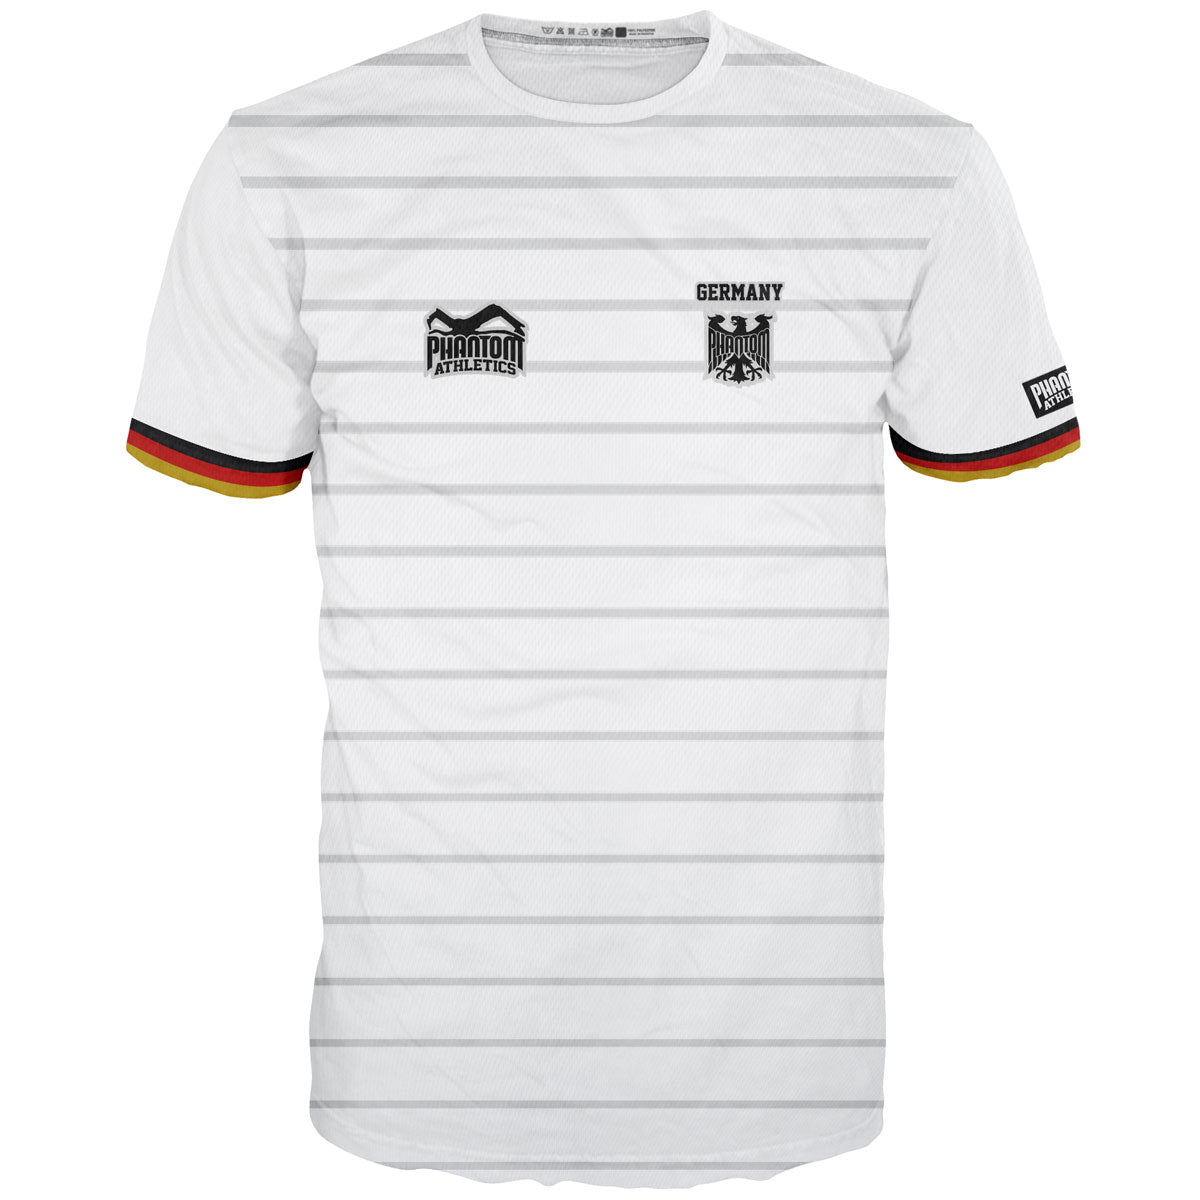 Training shirt evo germany - white